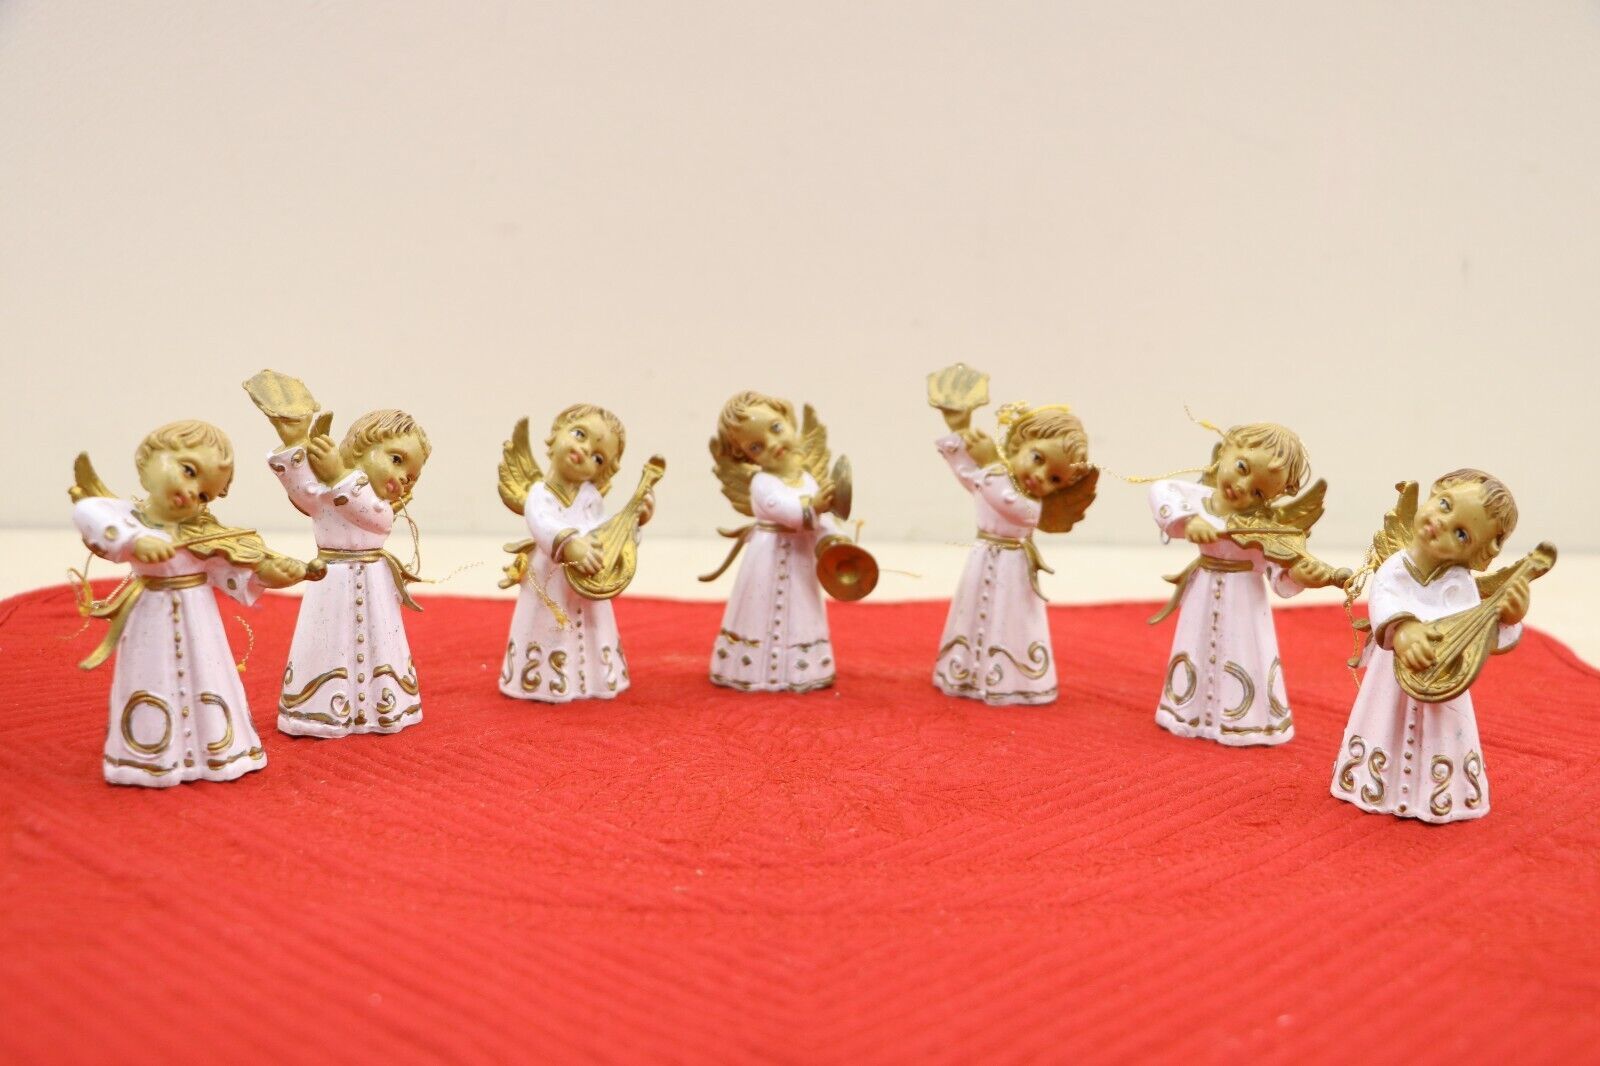 7 Vtg Christmas Angels Cherub Music Band Figures Ornaments Fontanini Like Italy - $27.67